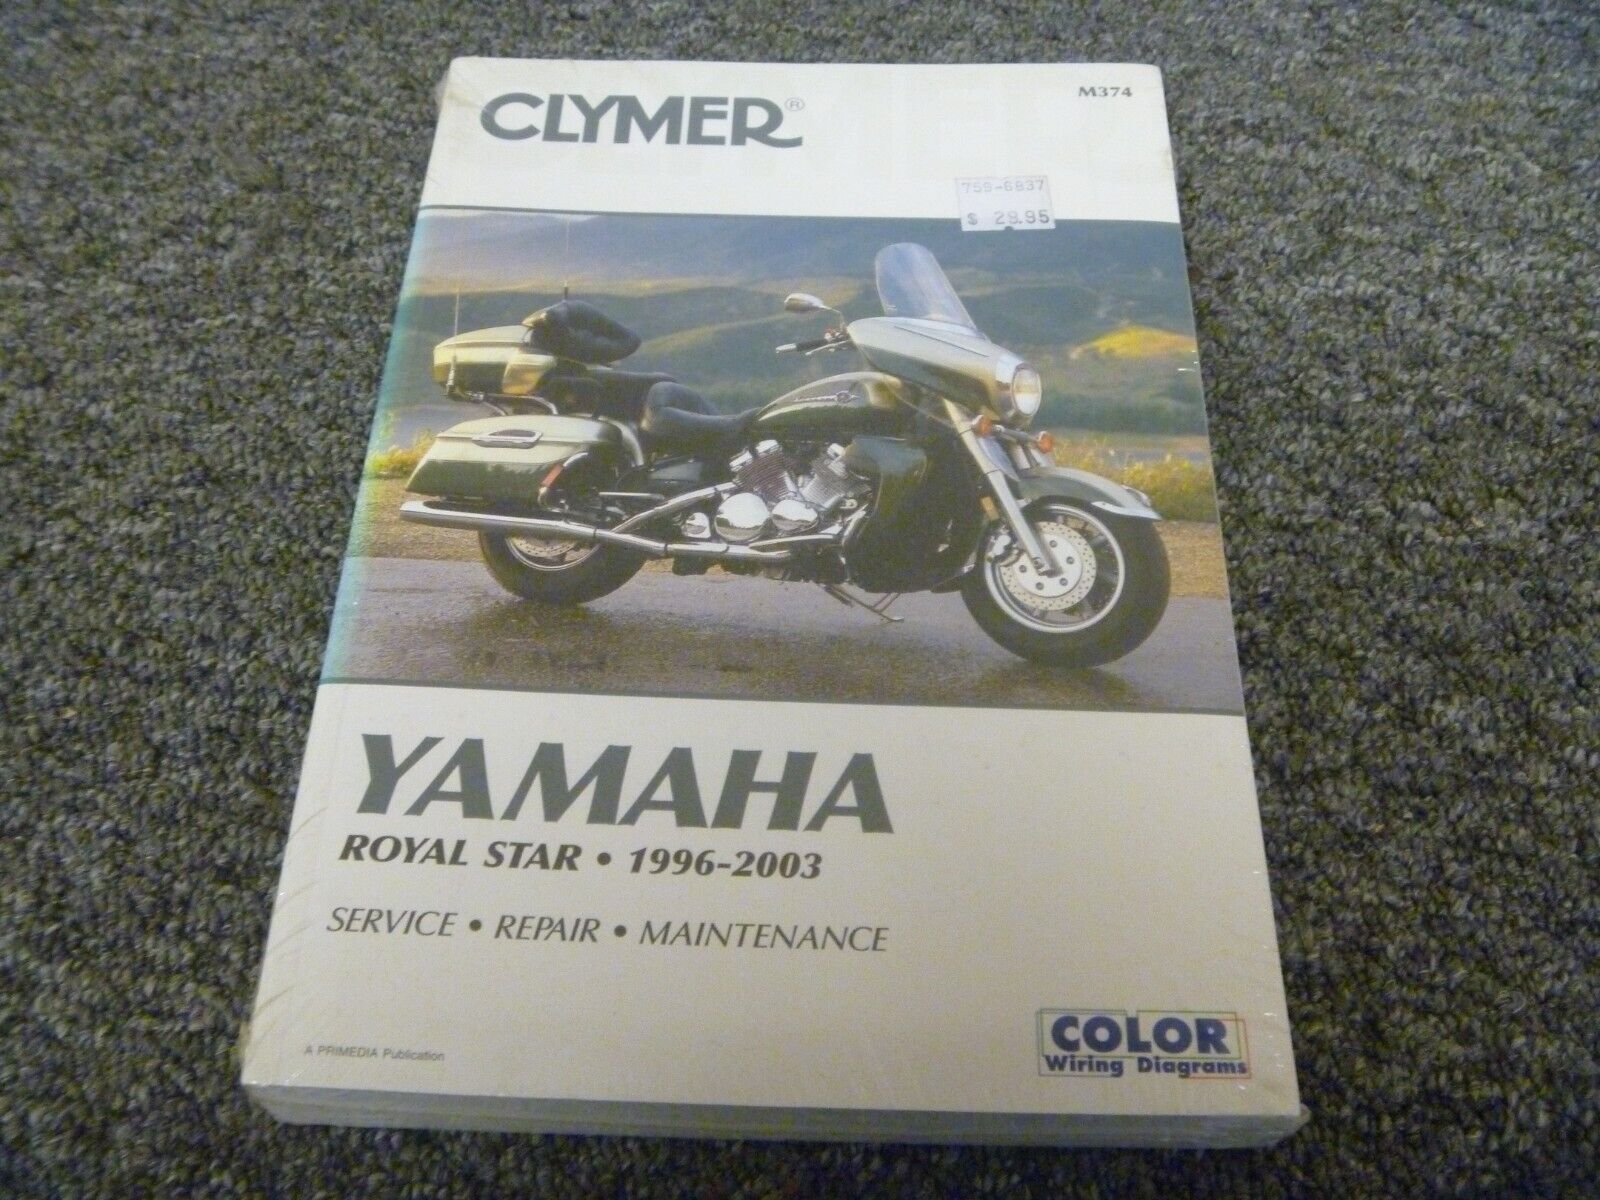 1996 1997 Clymer Yamaha Royal Star Motorcycle Shop Service Repair Manual M374